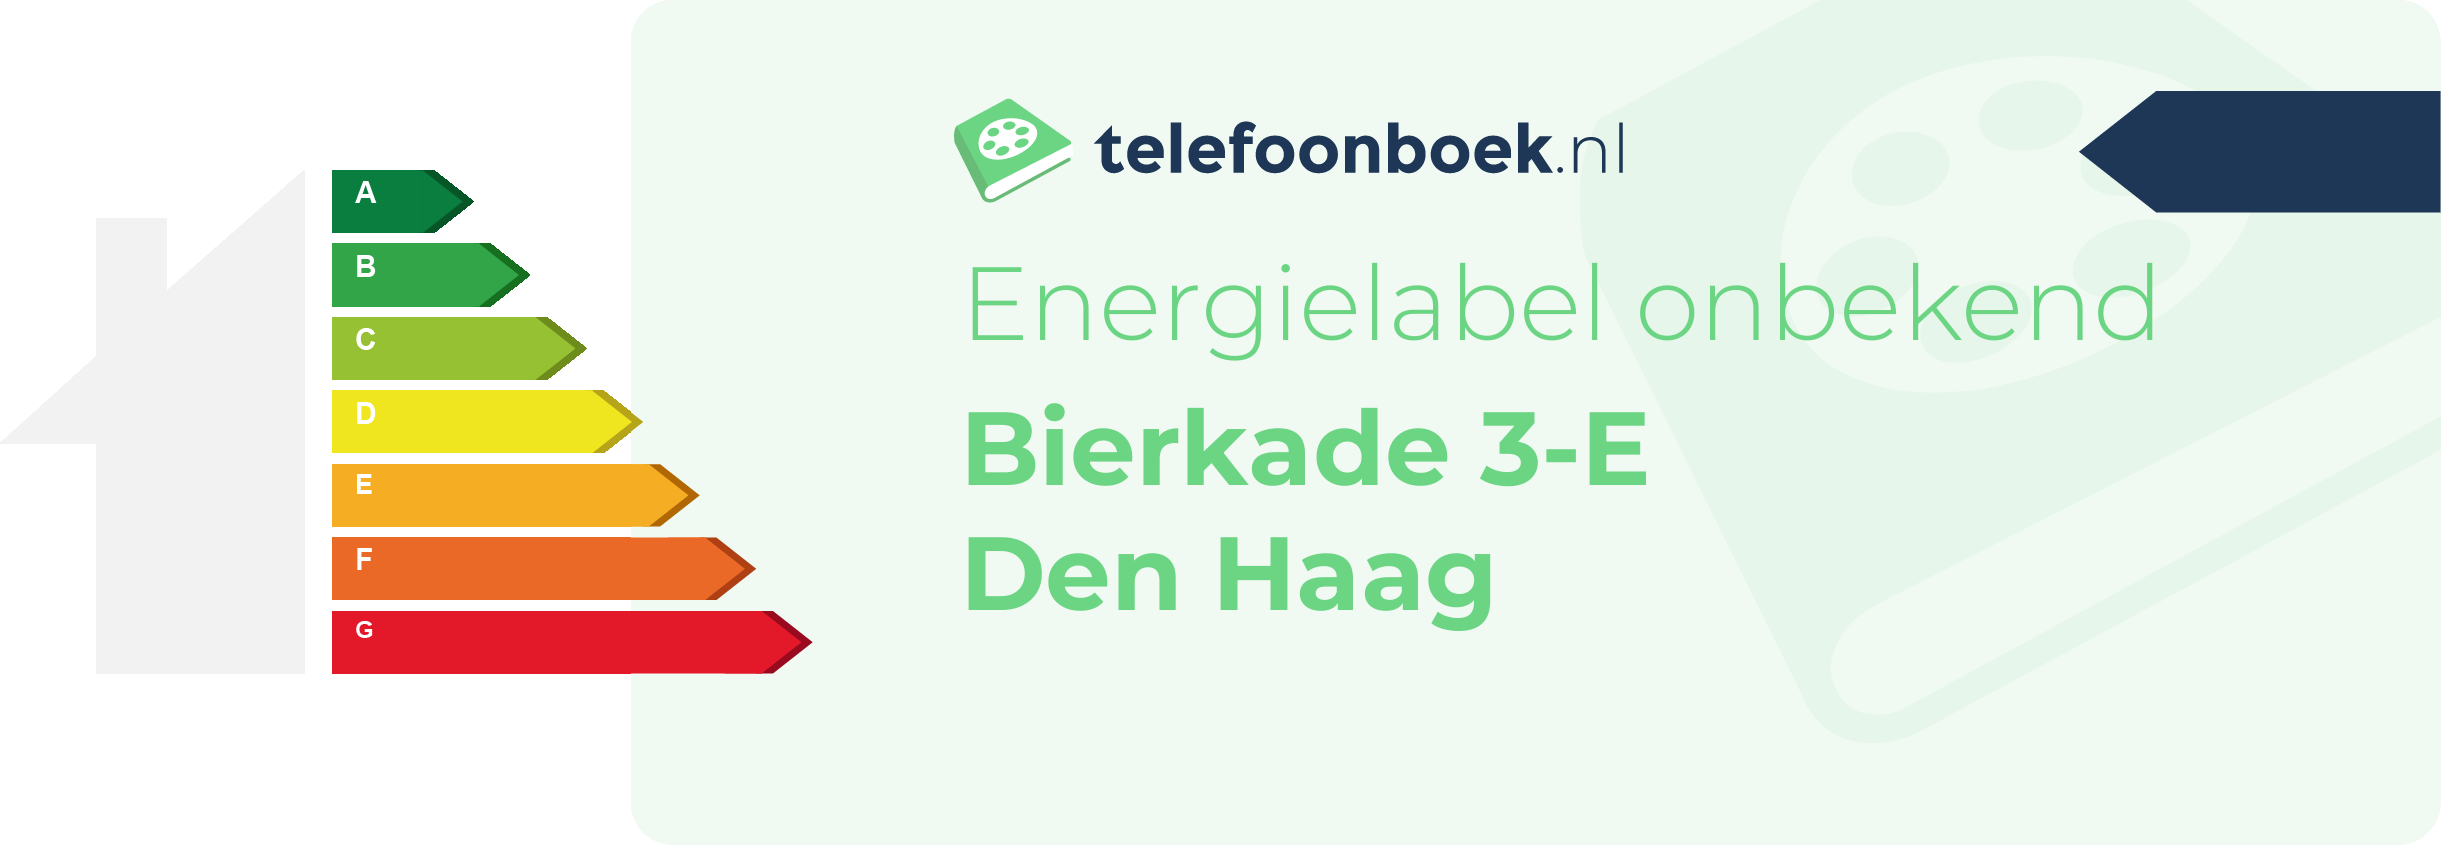 Energielabel Bierkade 3-E Den Haag